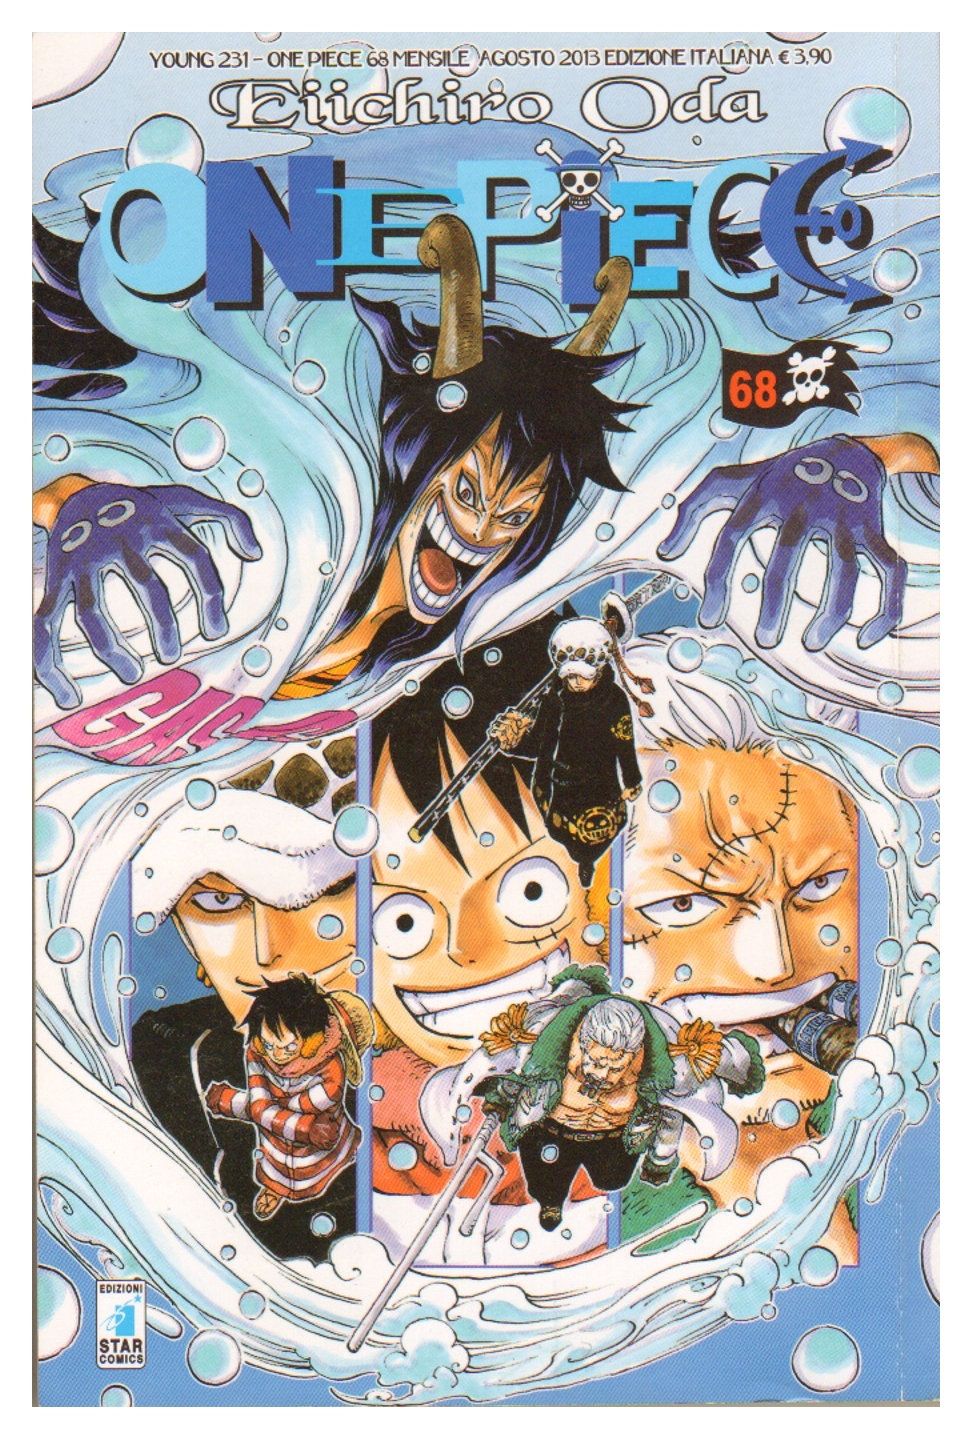 Eiichiro Oda One Piece N 68 Star Comics Young 231 Acquisti Online Su Ebay